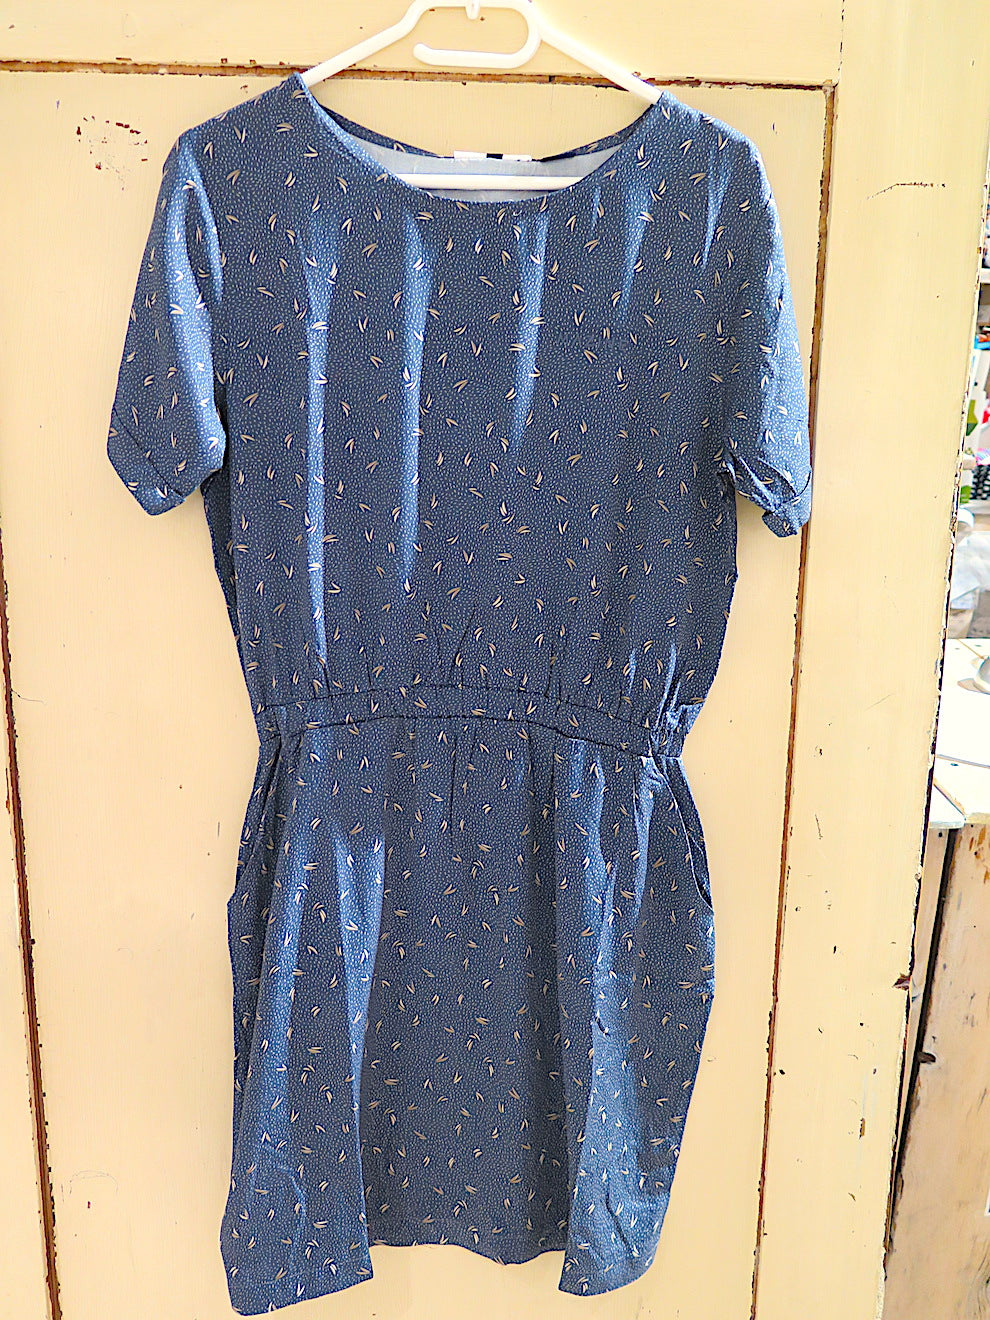 Mazine Valera Dress- ink blue printed